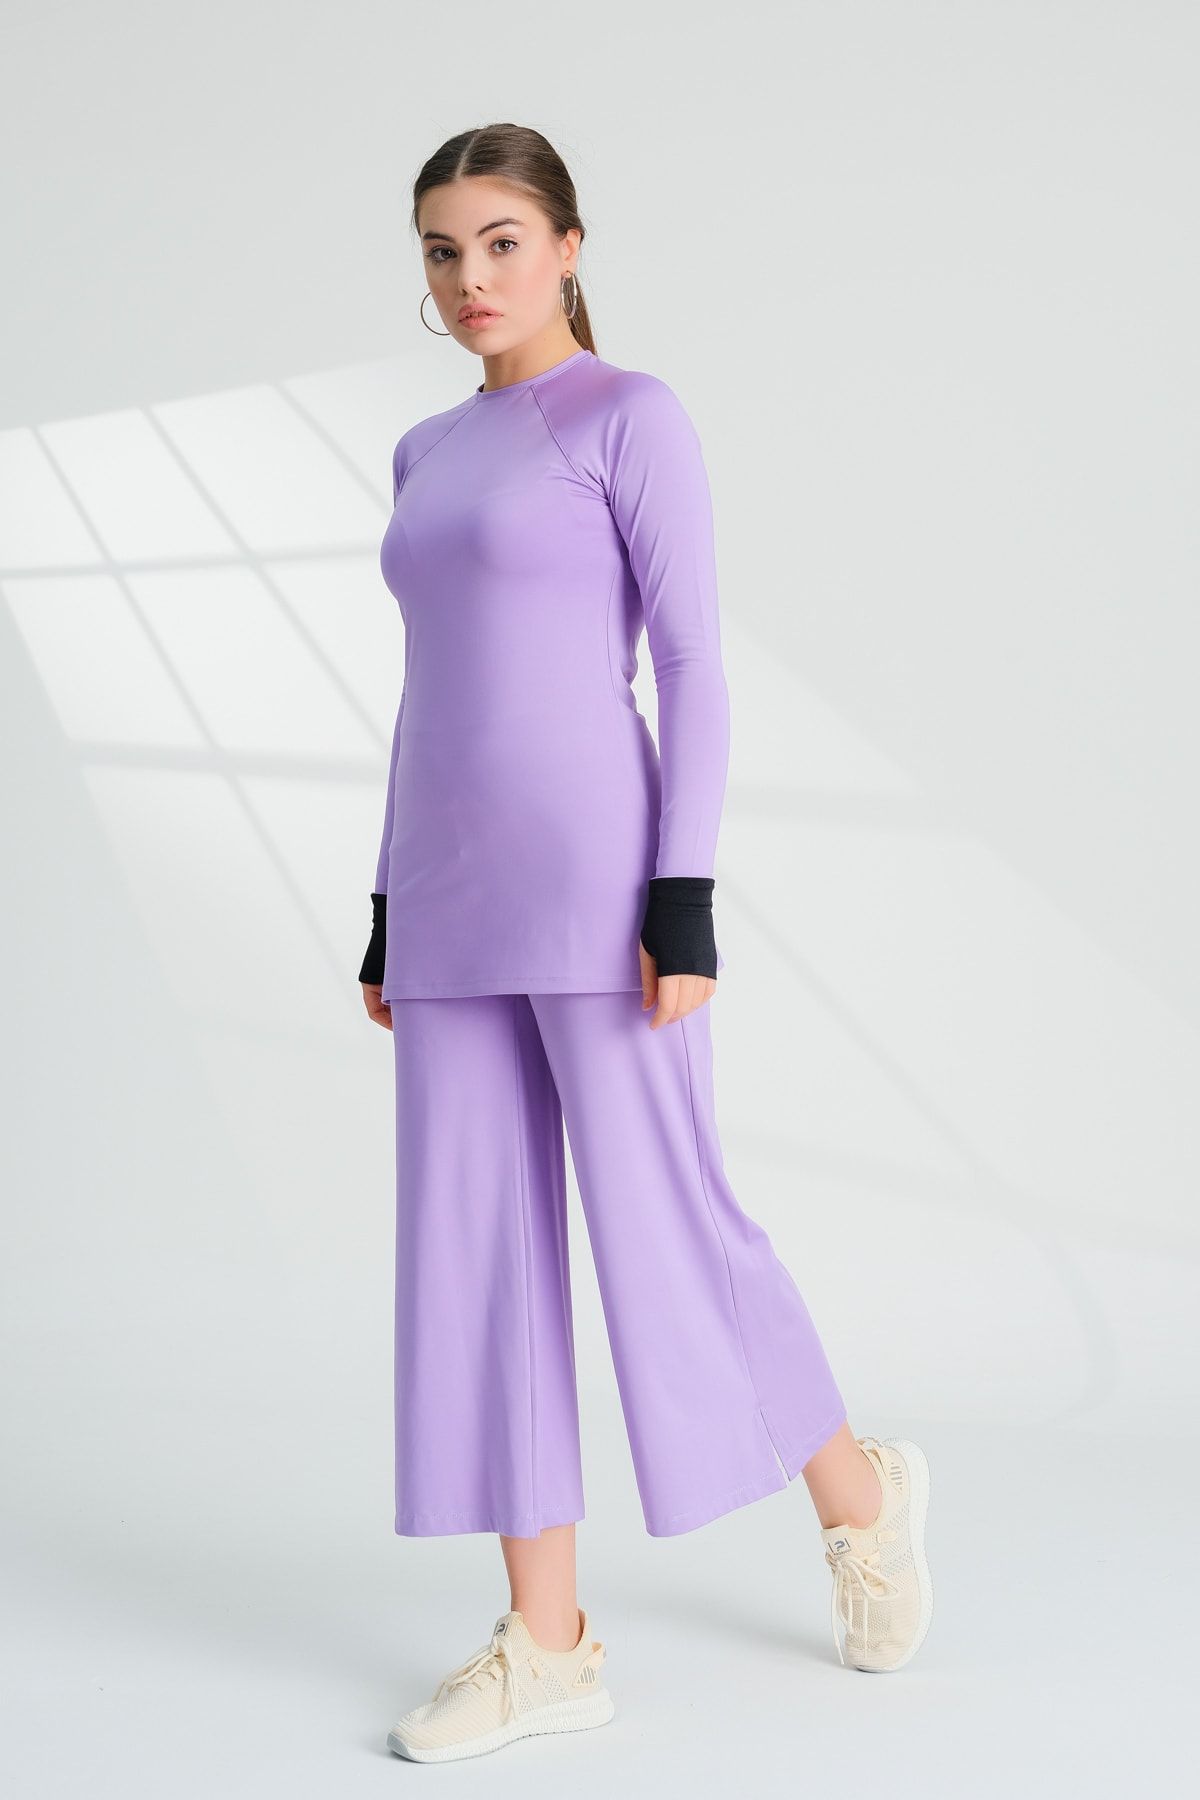 Emayo 4e Activewear Modest Culotte Spor Pantolon